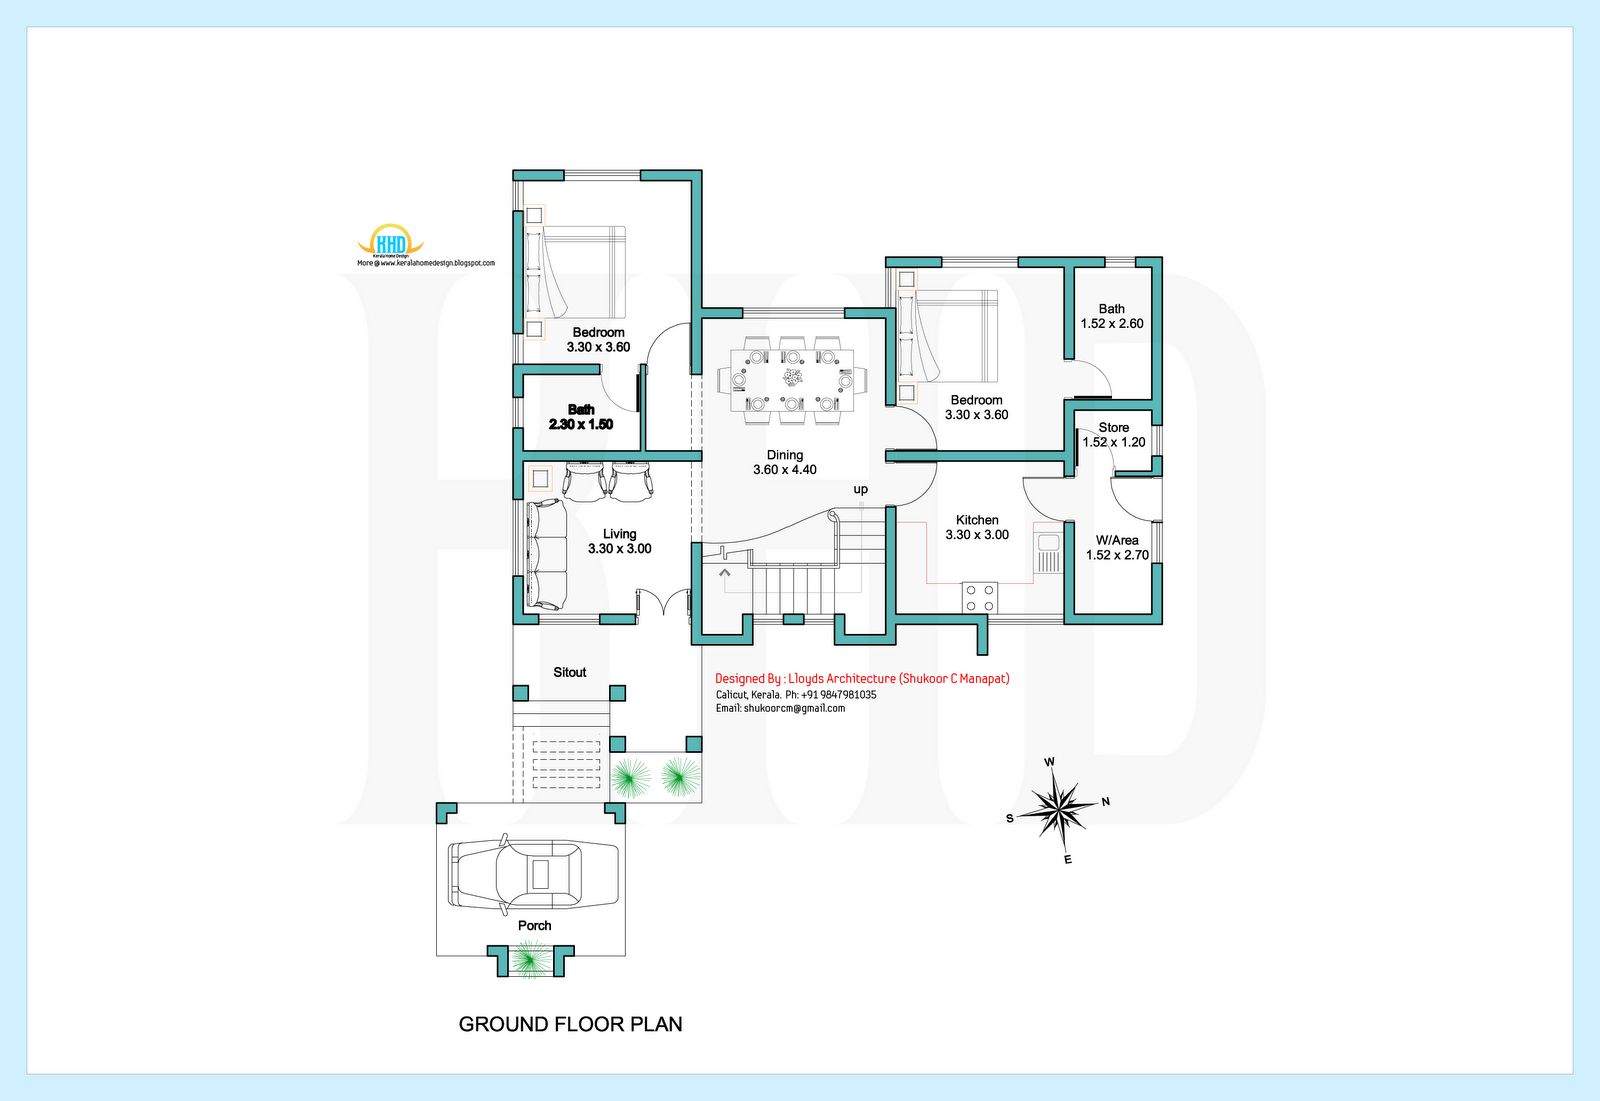 2 Bedroom Duplex Apartment Plans